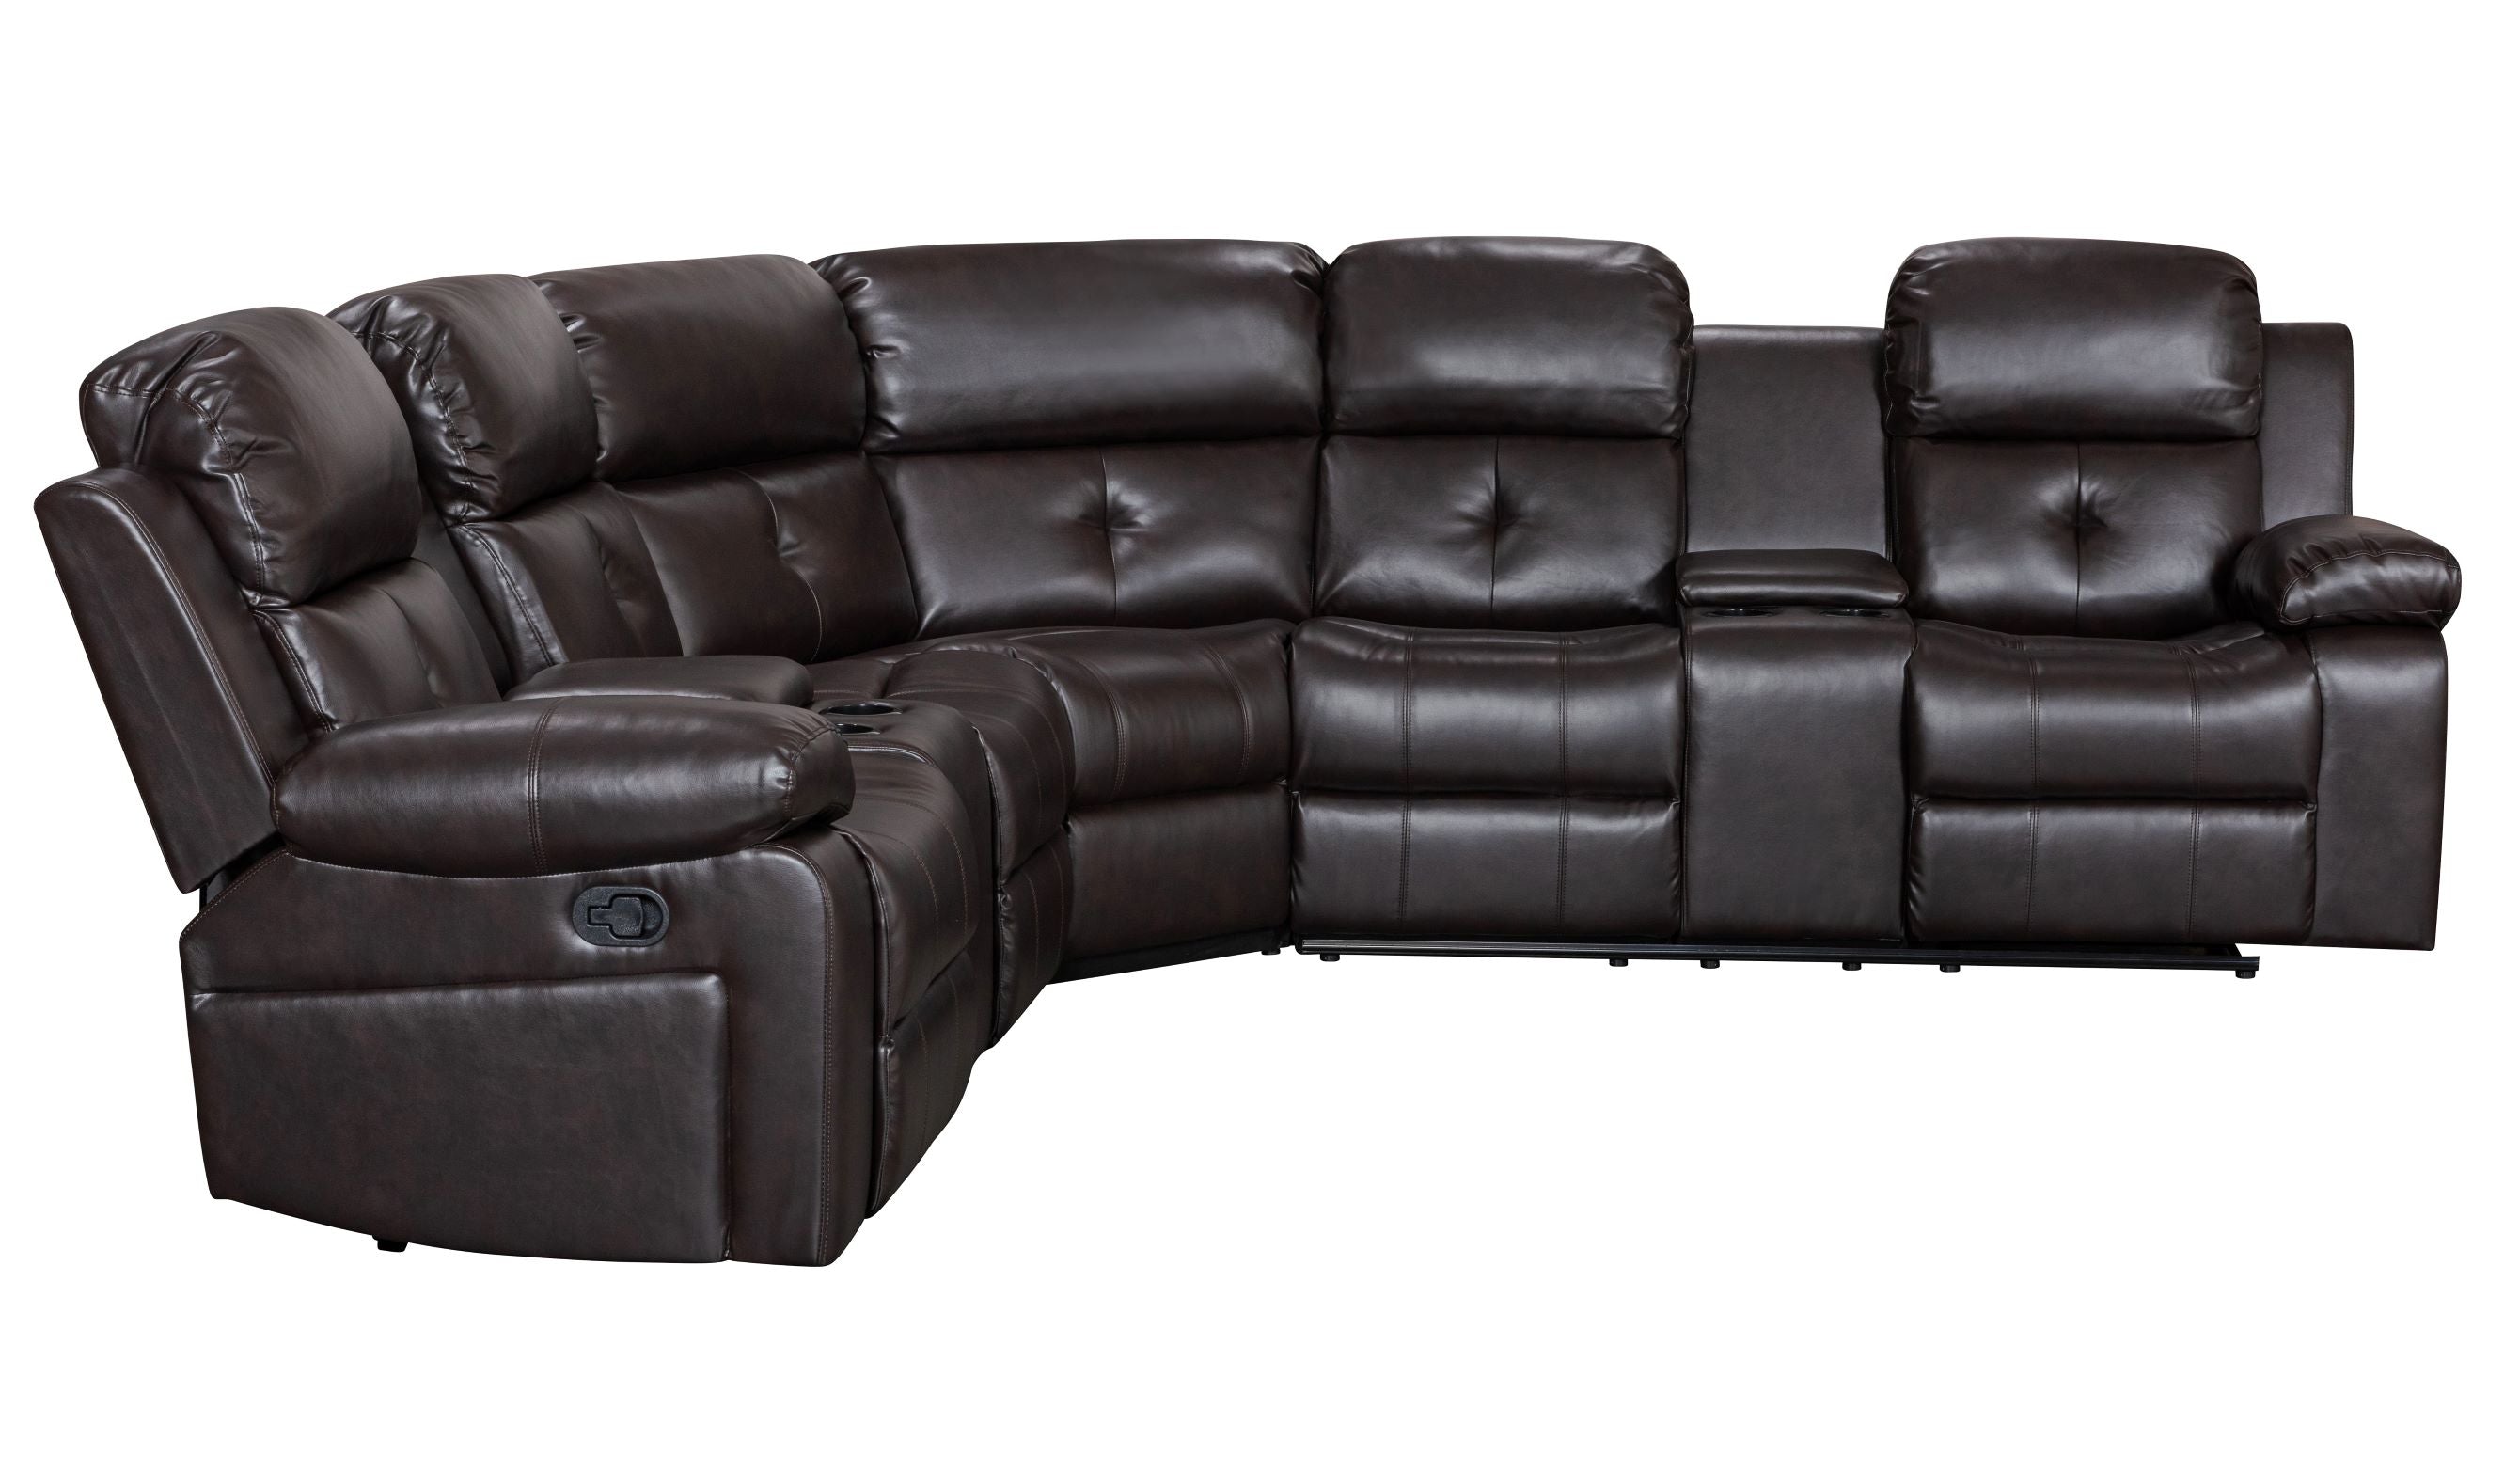 Marcel Manual Recliner Sectional Sofa Dark Brown Gel Leather 73010